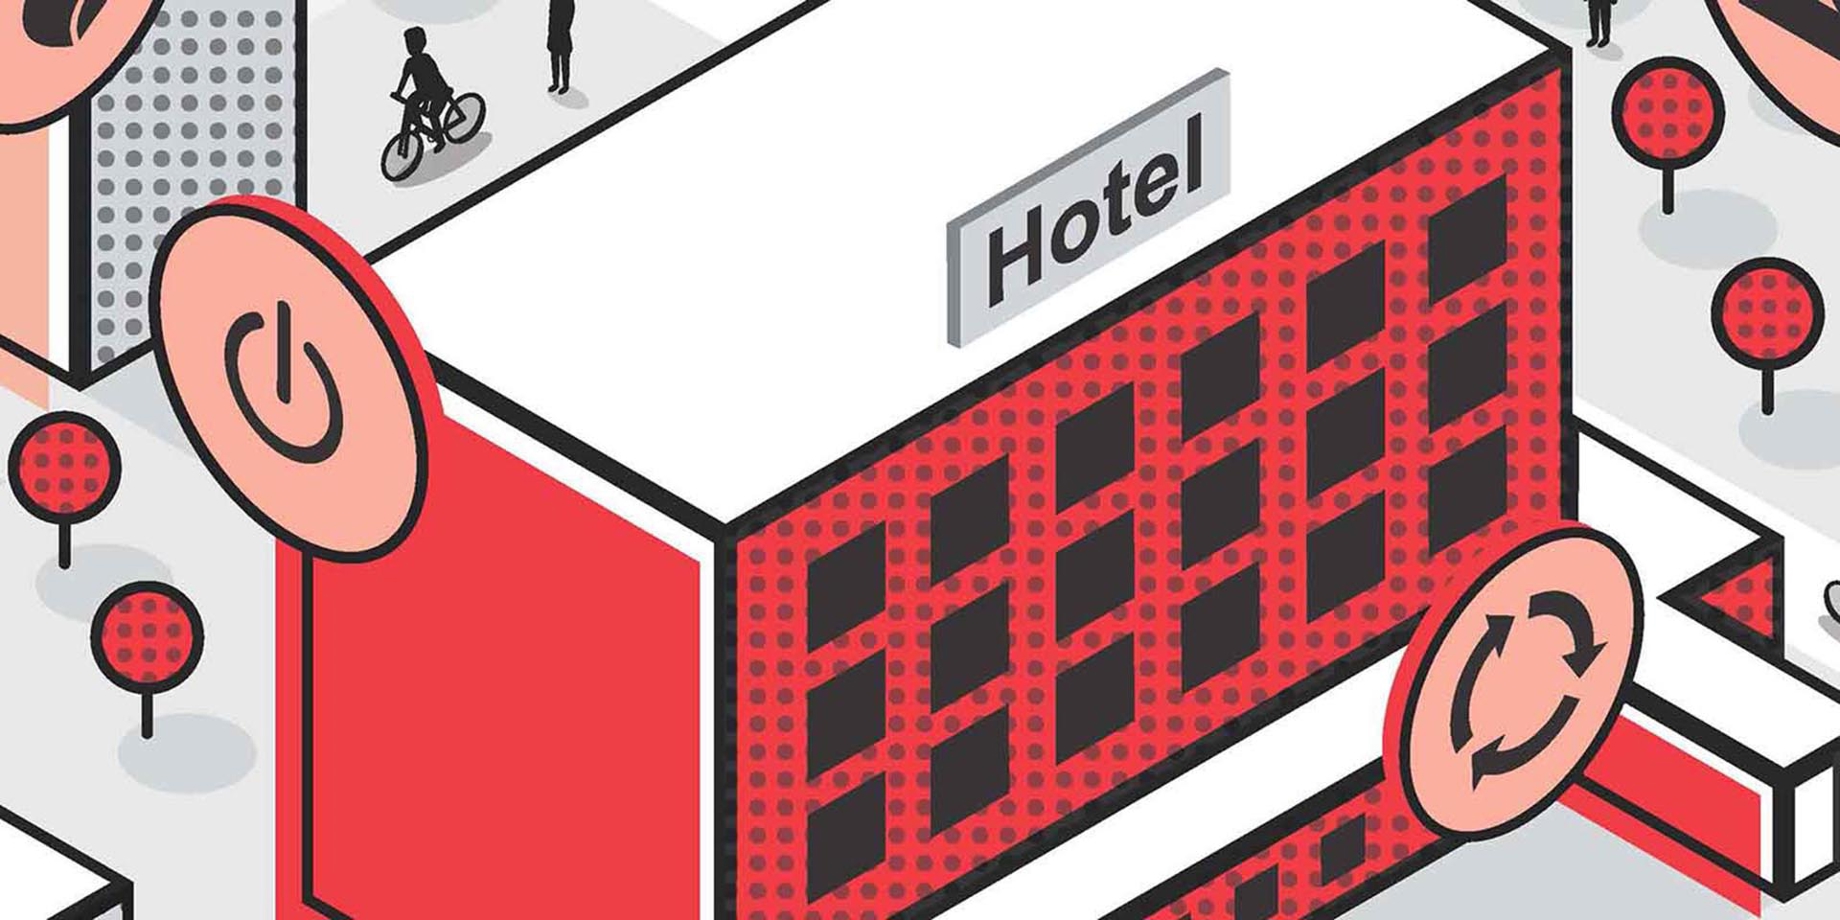 Rethinking existing hotels to net zero carbon